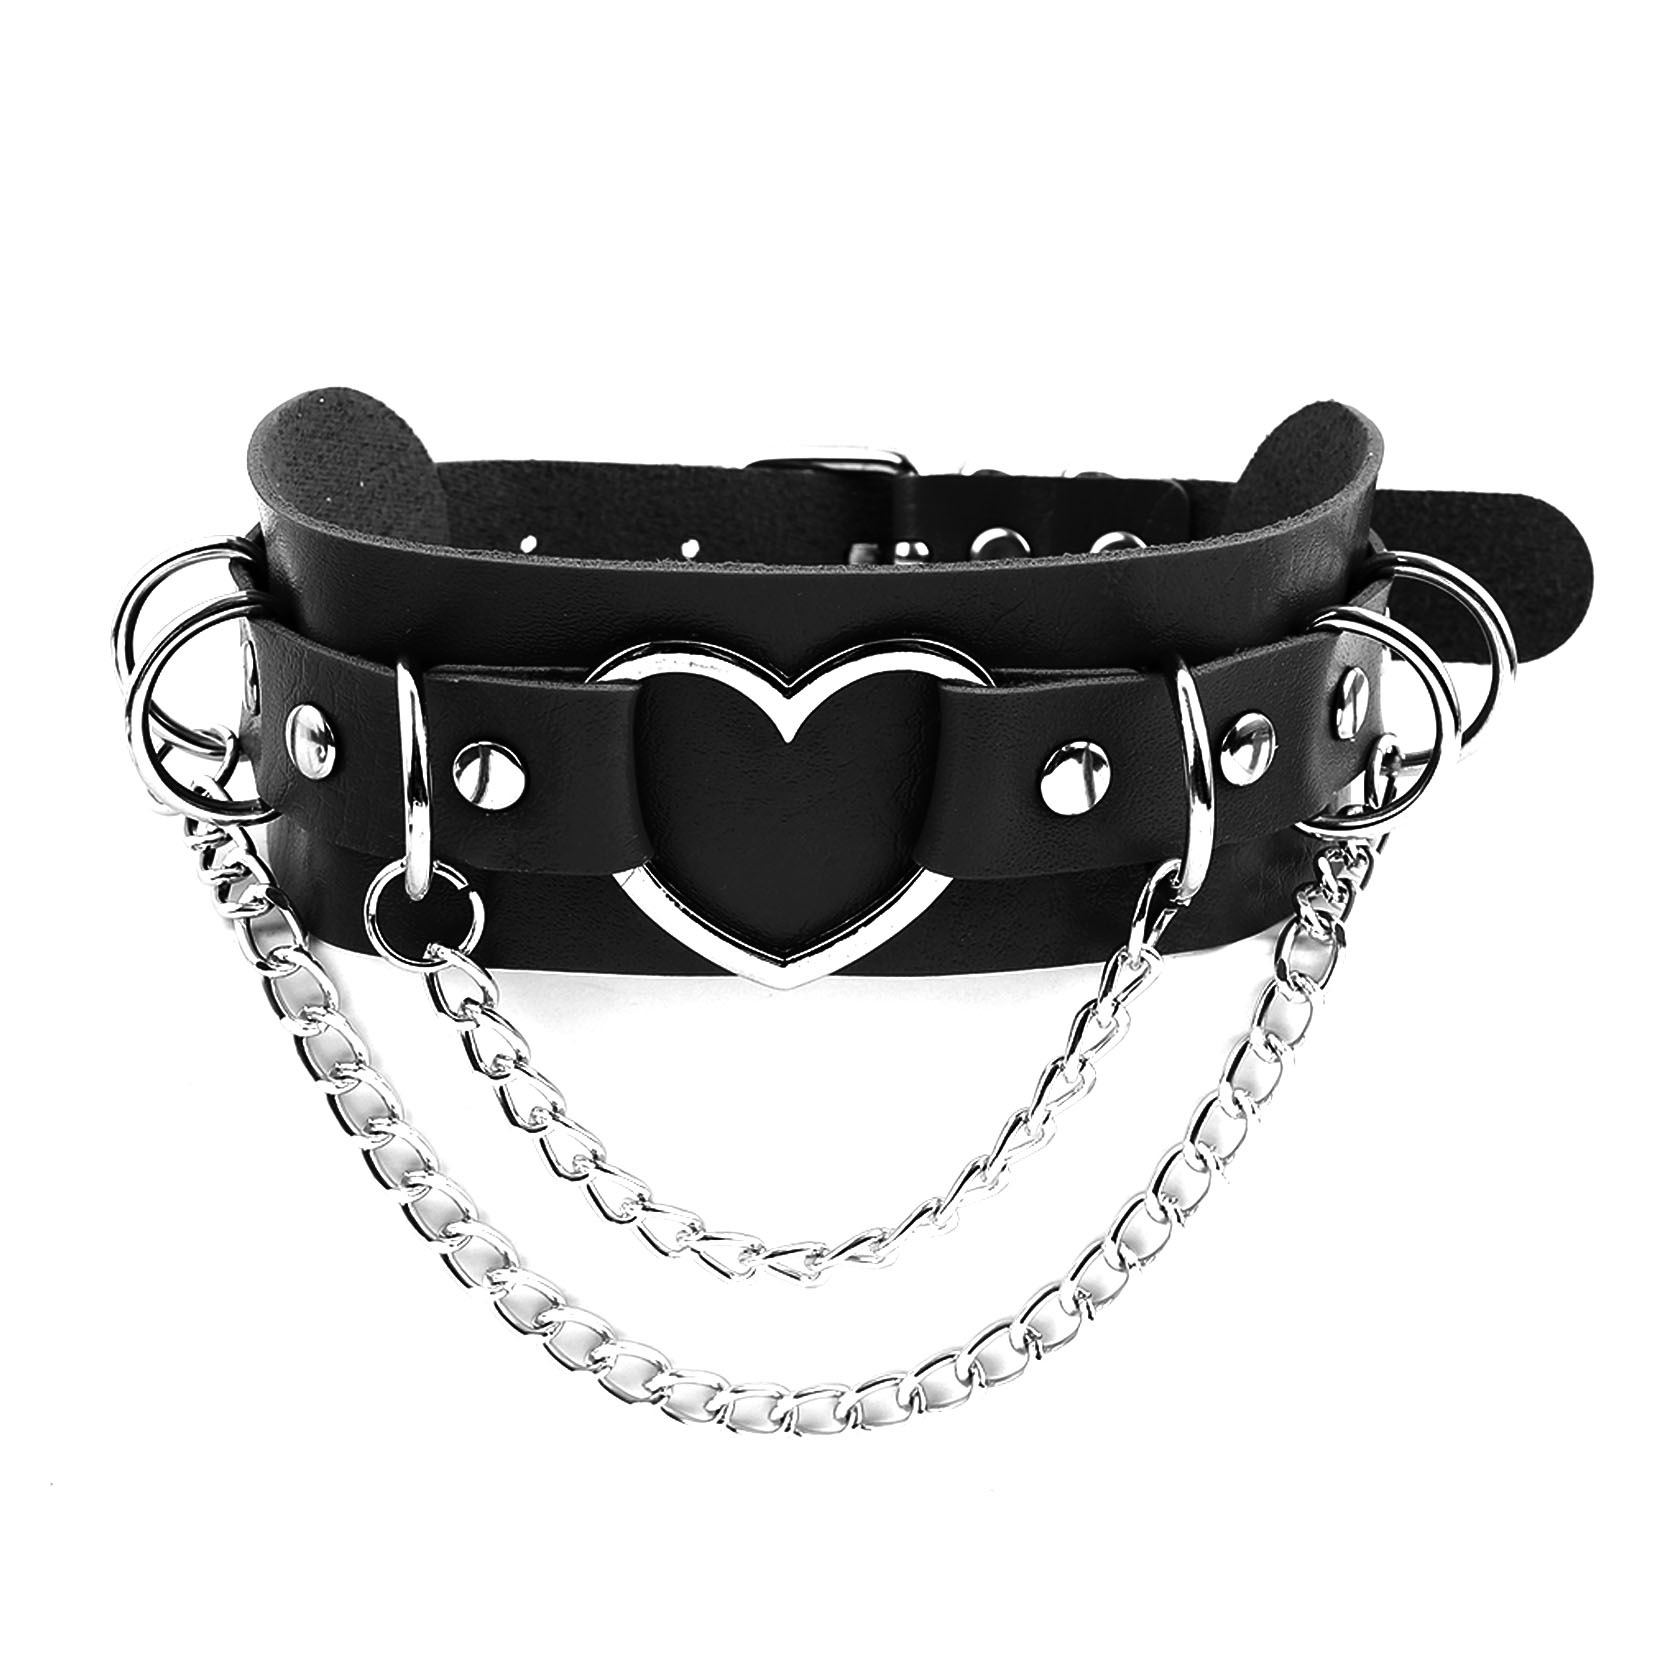 Gothic punk heart ring cuban chain adjustable neckband collar choker